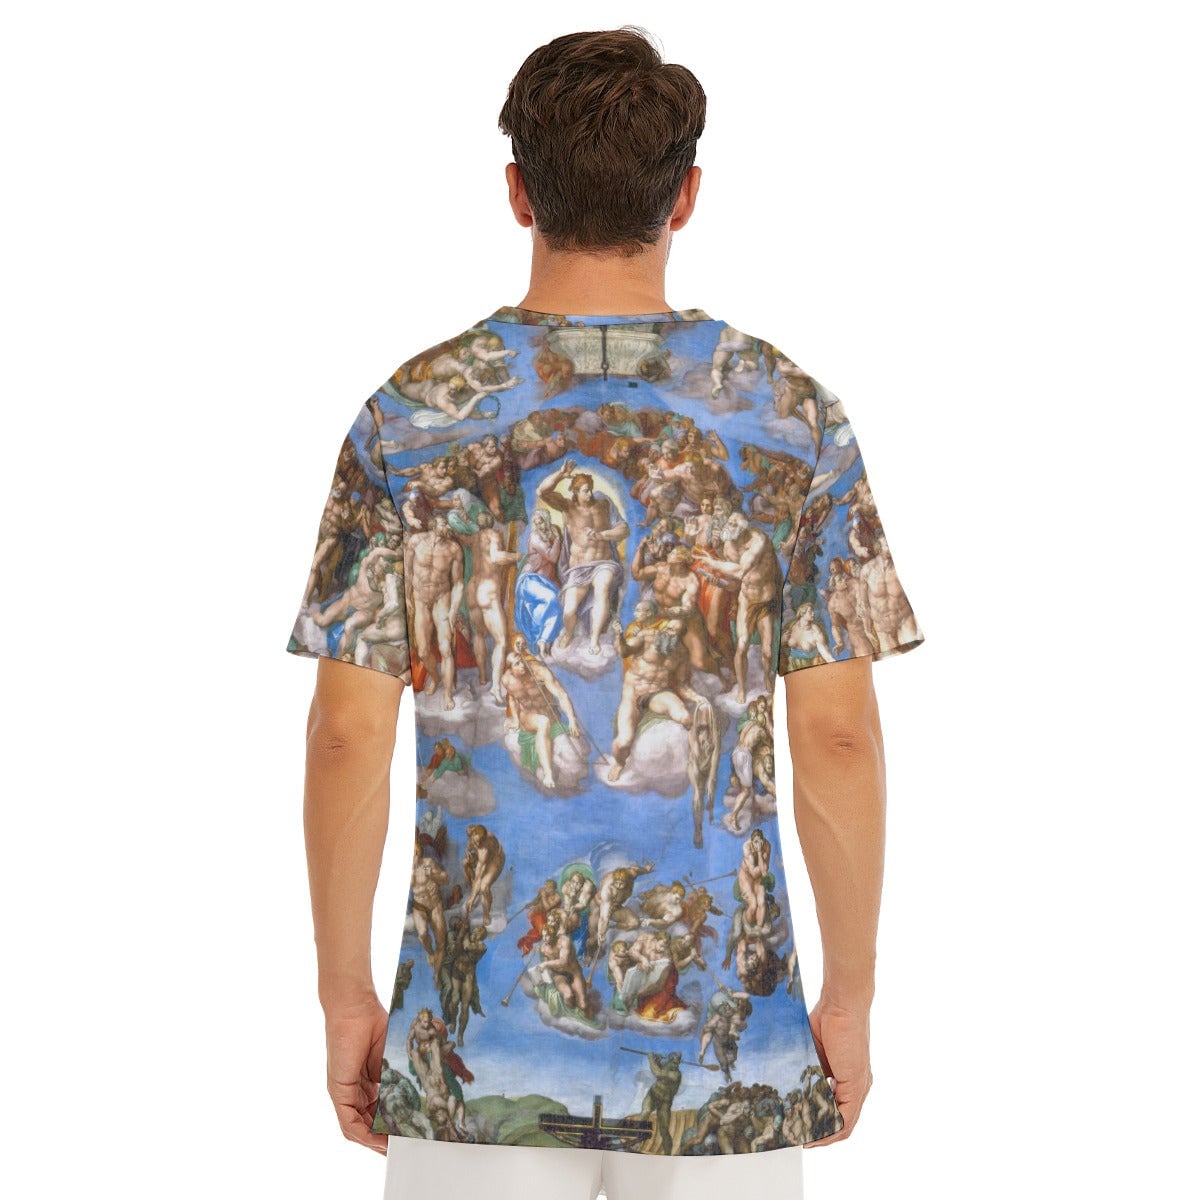 Michelangelo’s The Last Judgment T-Shirt